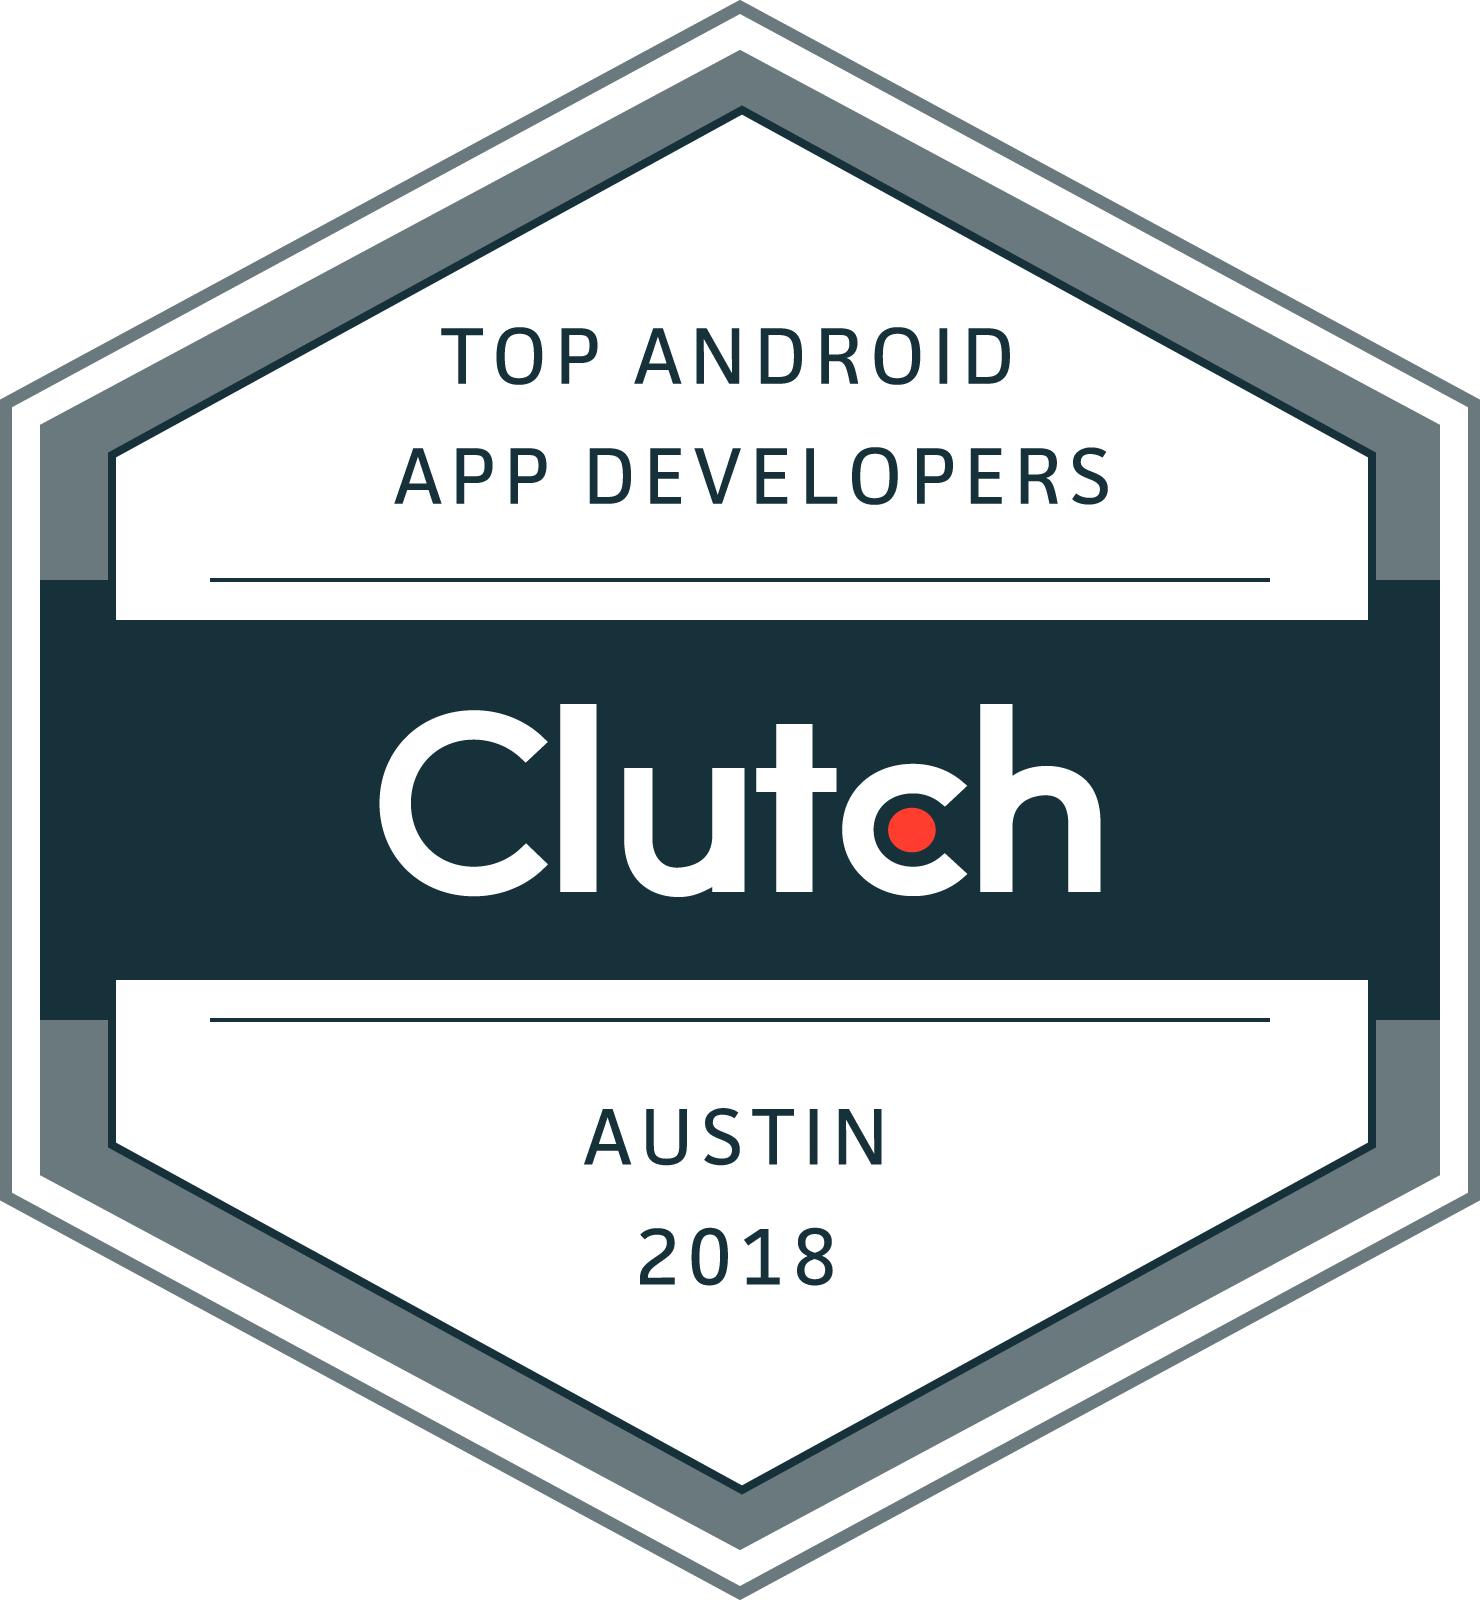 Top Android App Development Comany Austin, TX 2018 Badge